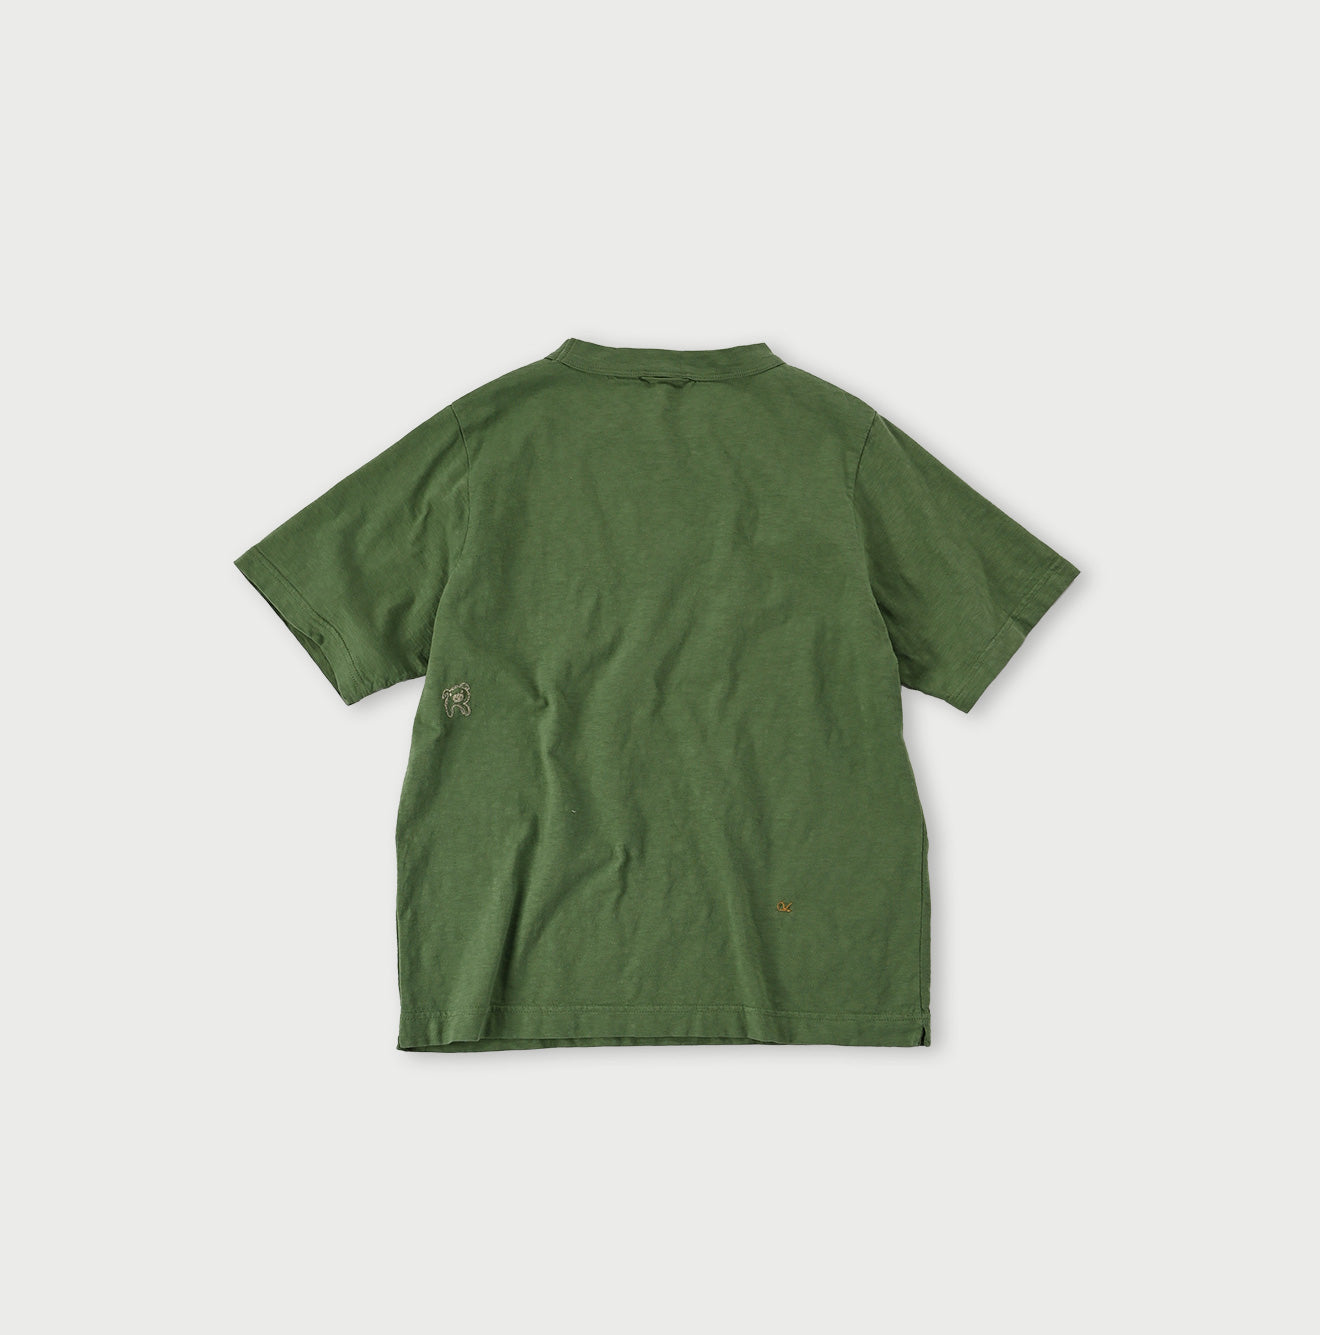 R-piggy 908 Embroidery T-shirt